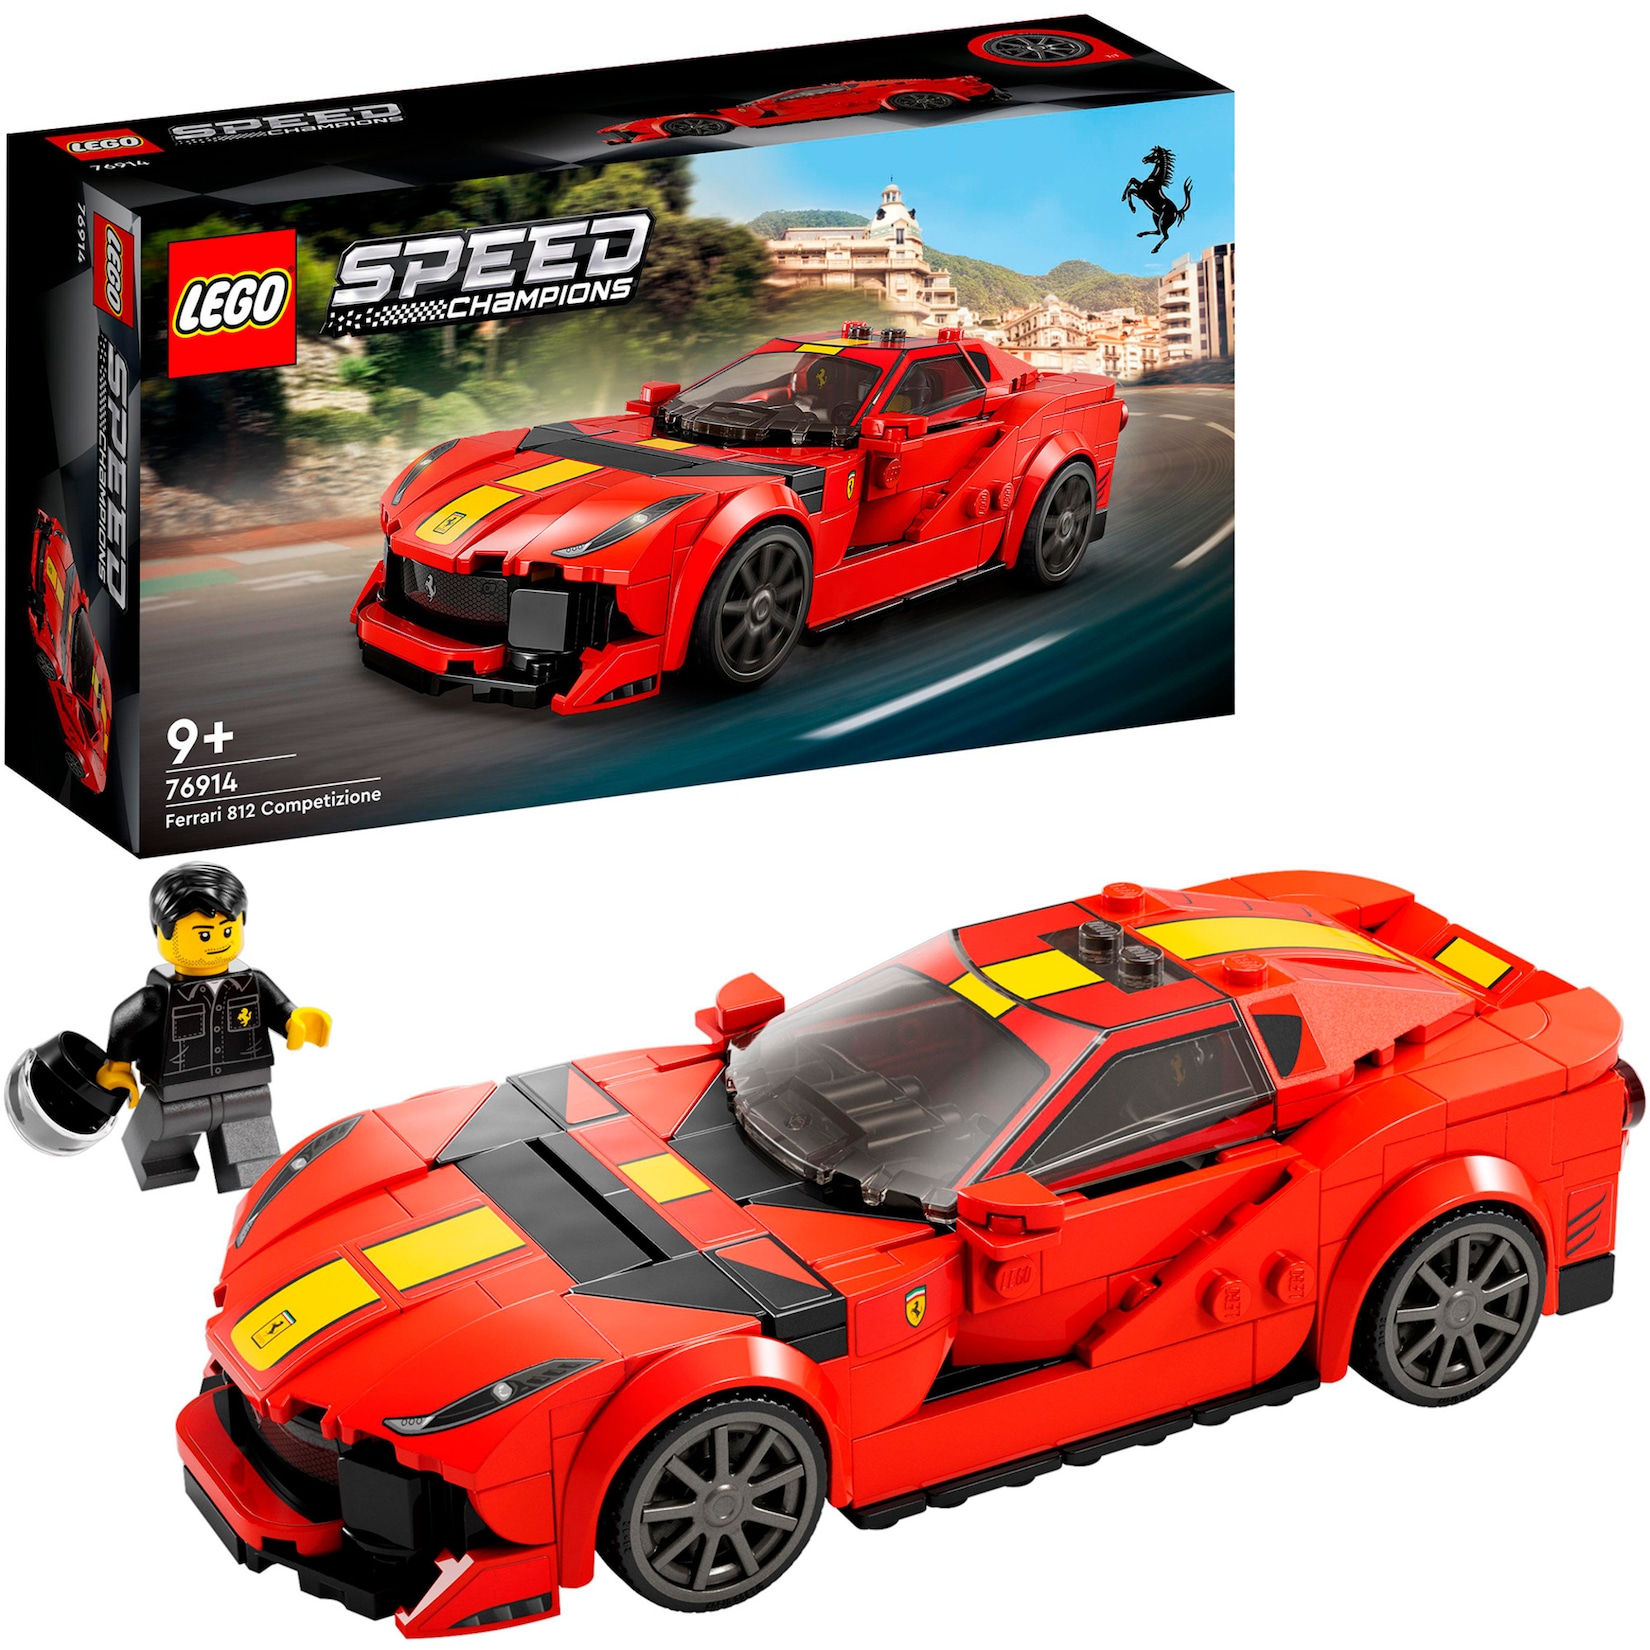 LEGO Konstruktionsspielzeug Speed Champions Ferrari 812 Competizione